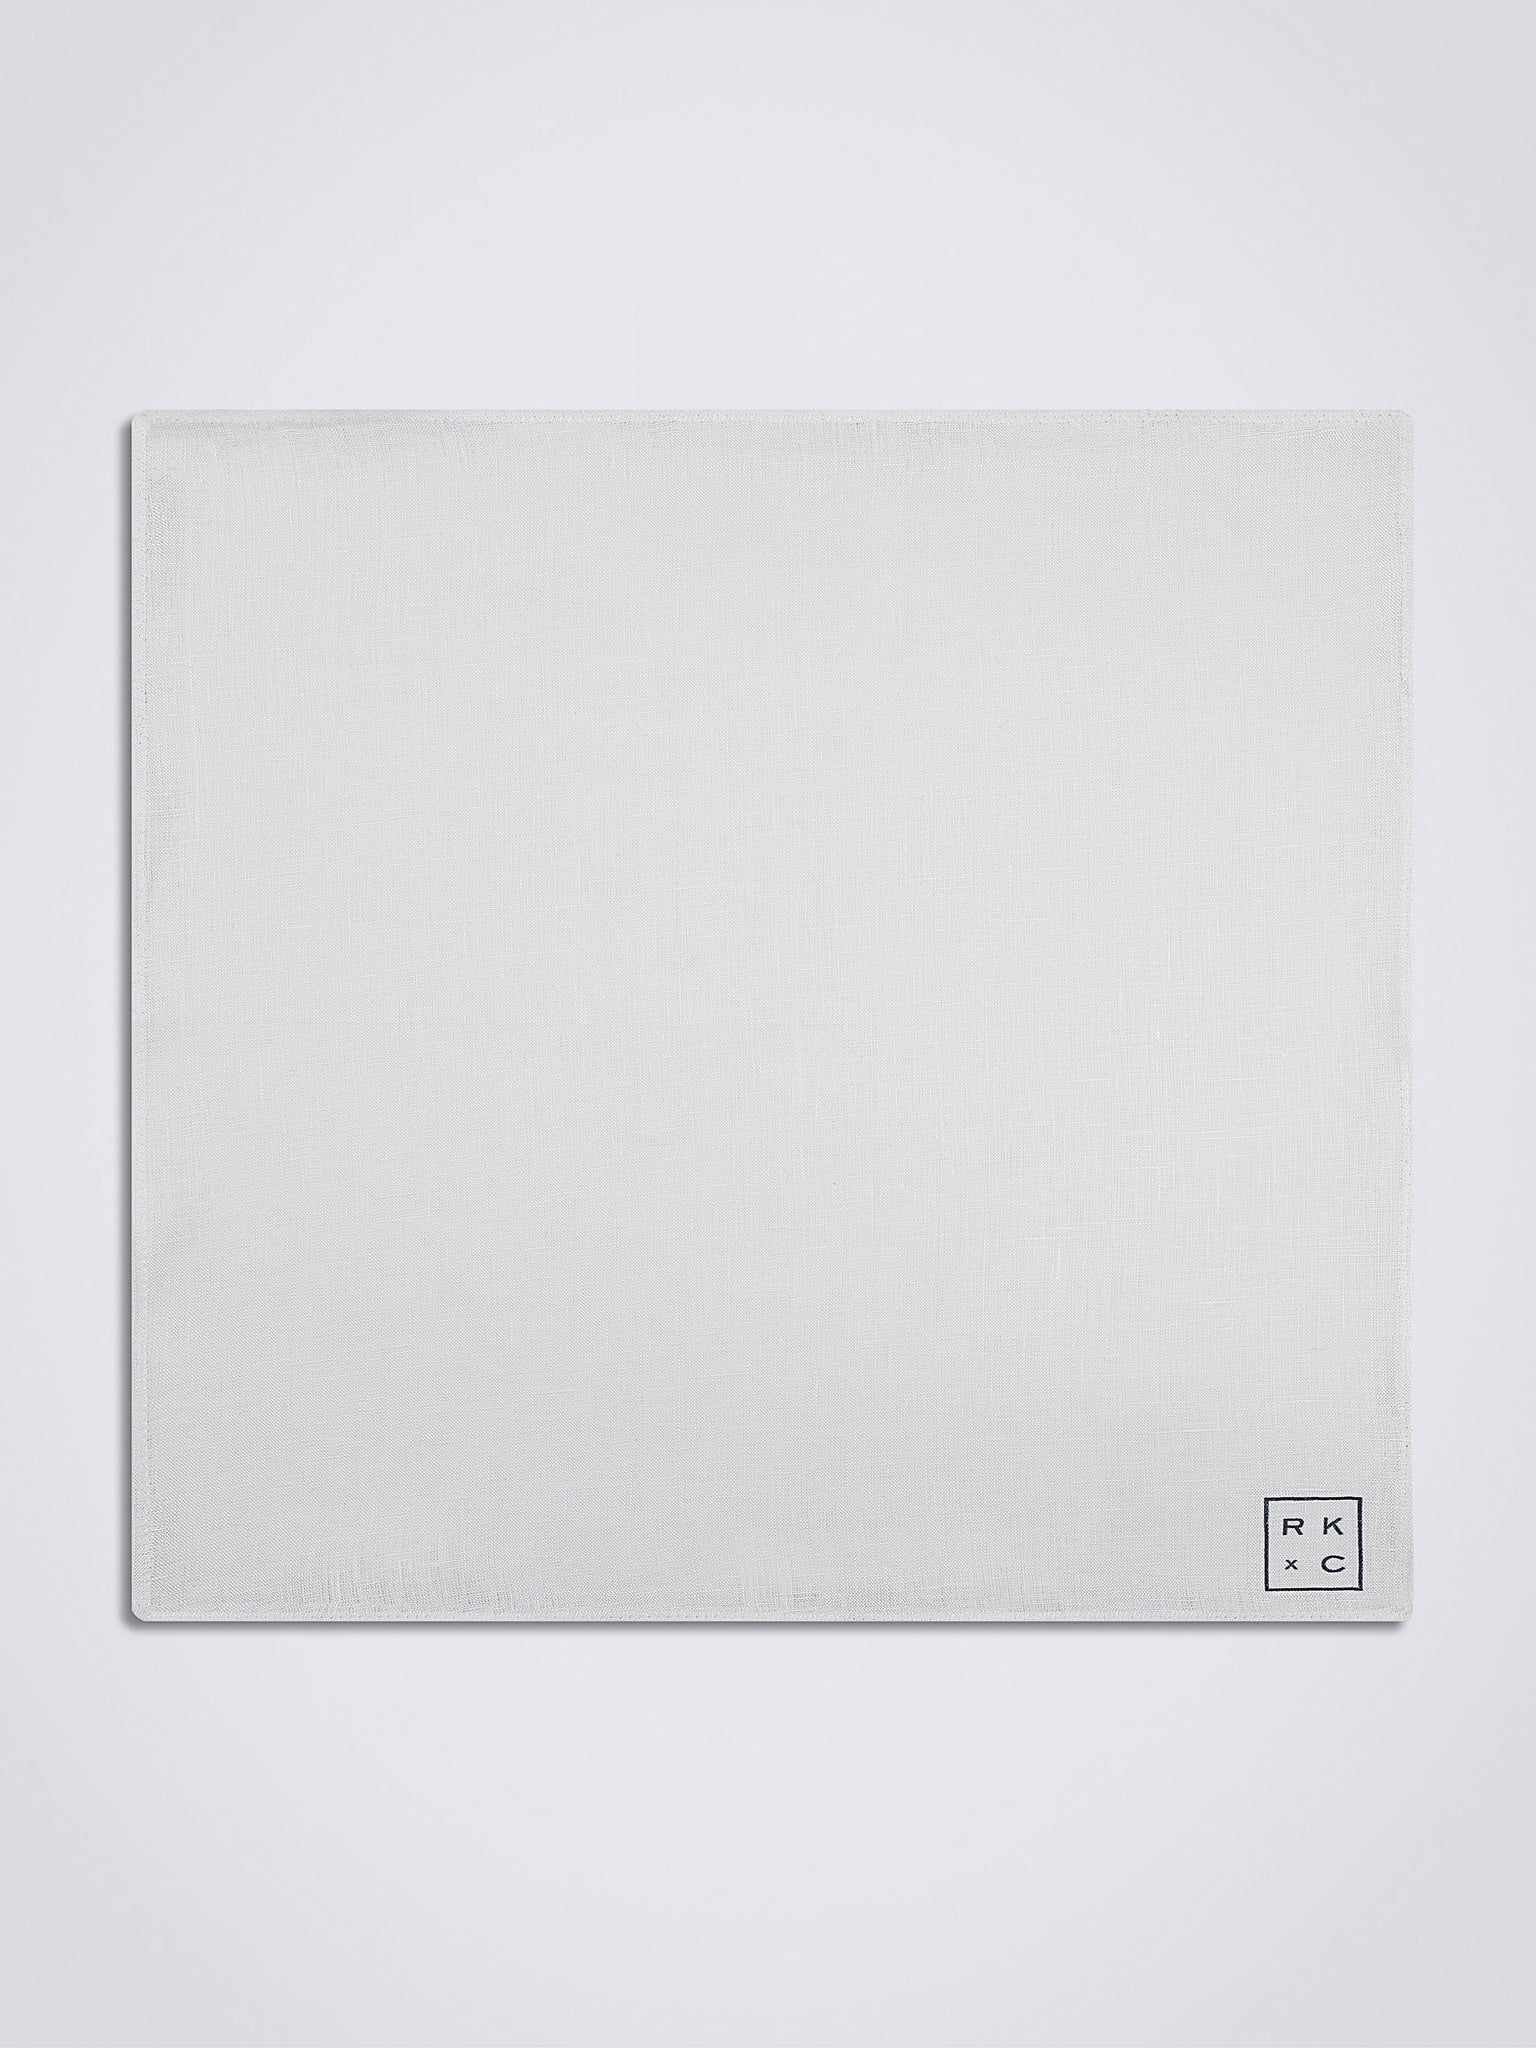 Flat White - Pocket Square